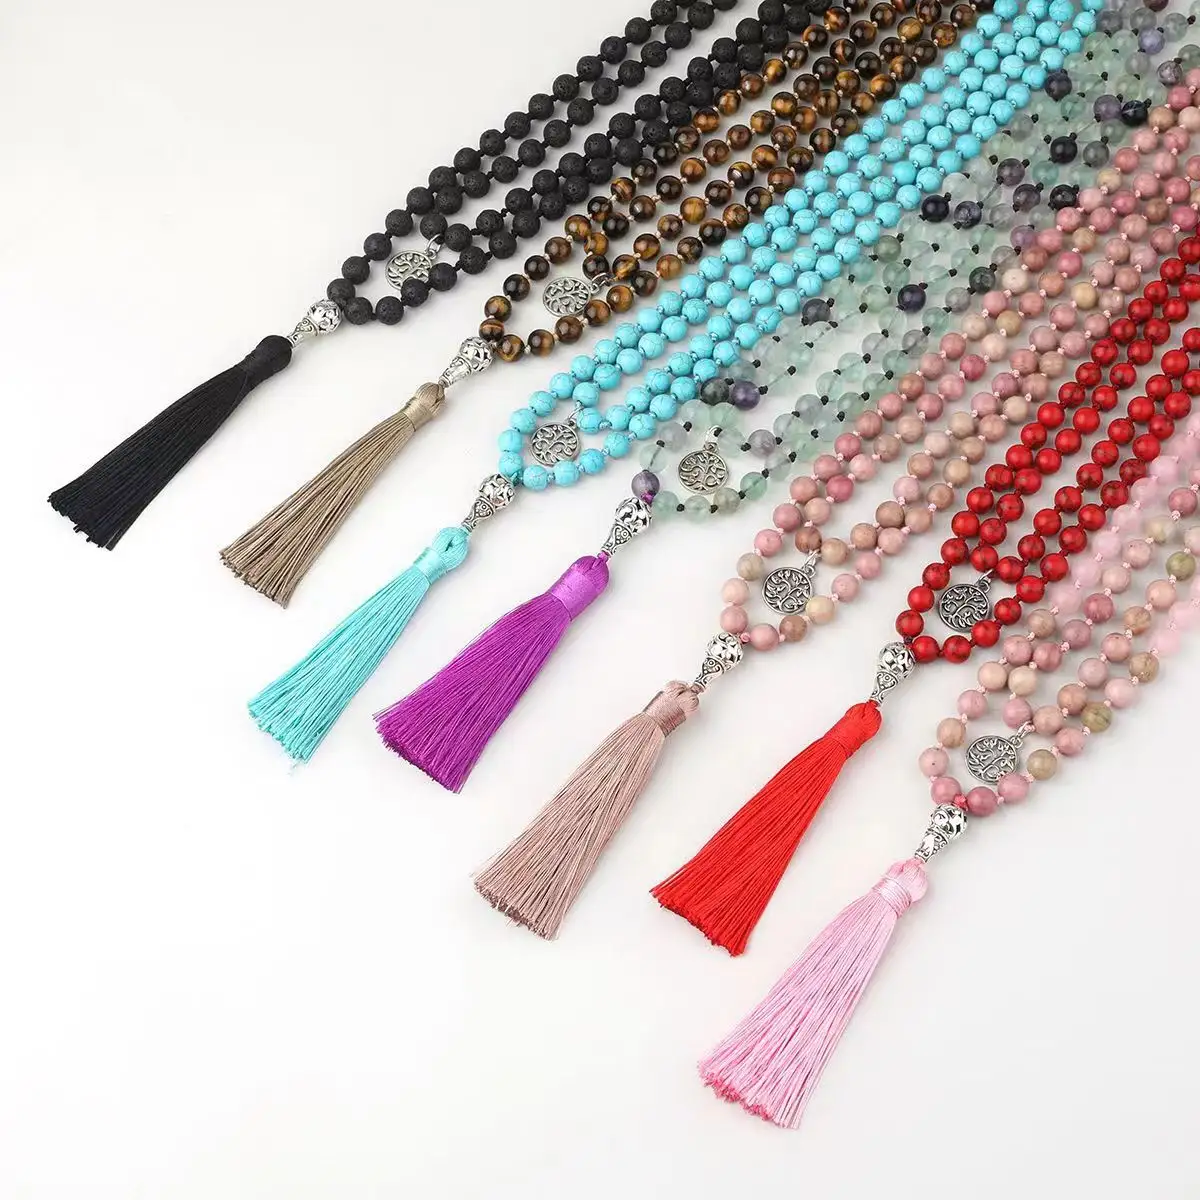 Popular Bohemian Healing Crystal Necklaces Long Tassel 8mm Natural Stone Buddha Prayer Beads Long Mala Beads 108 Necklace